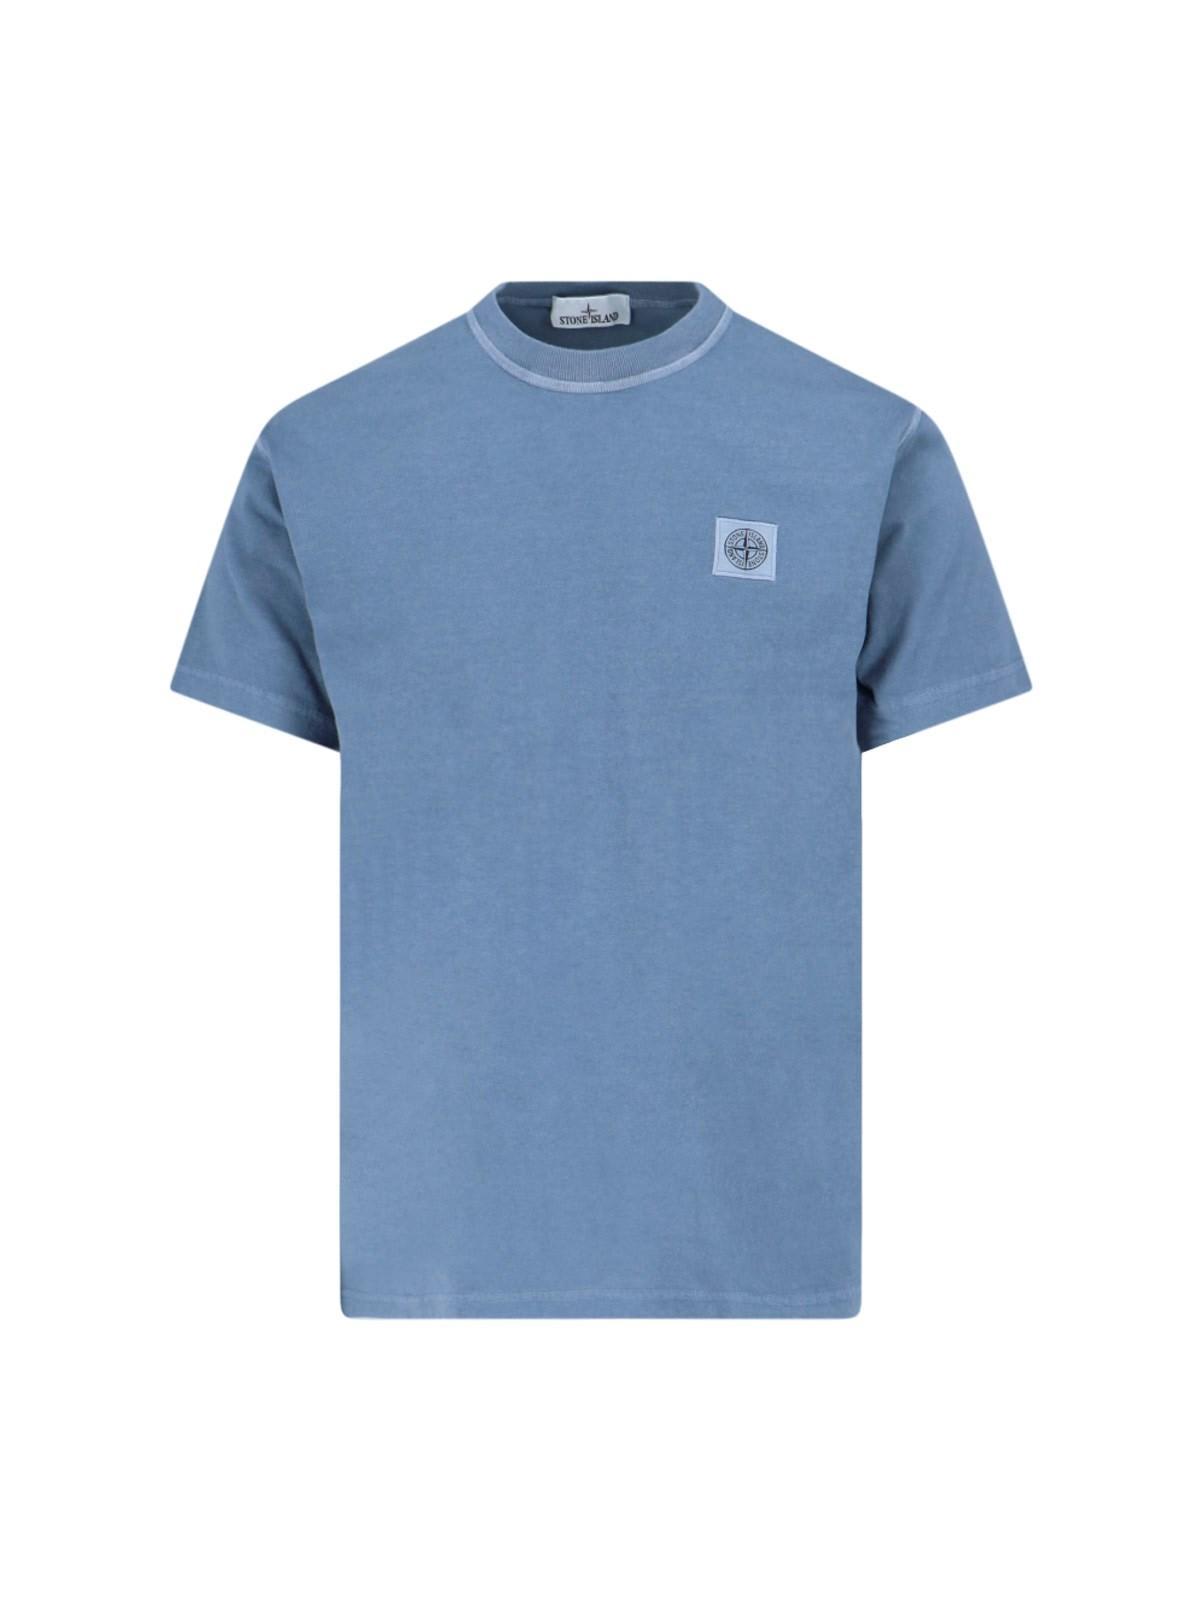 Stone Island Logo T-shirt in Blue for Men | Lyst